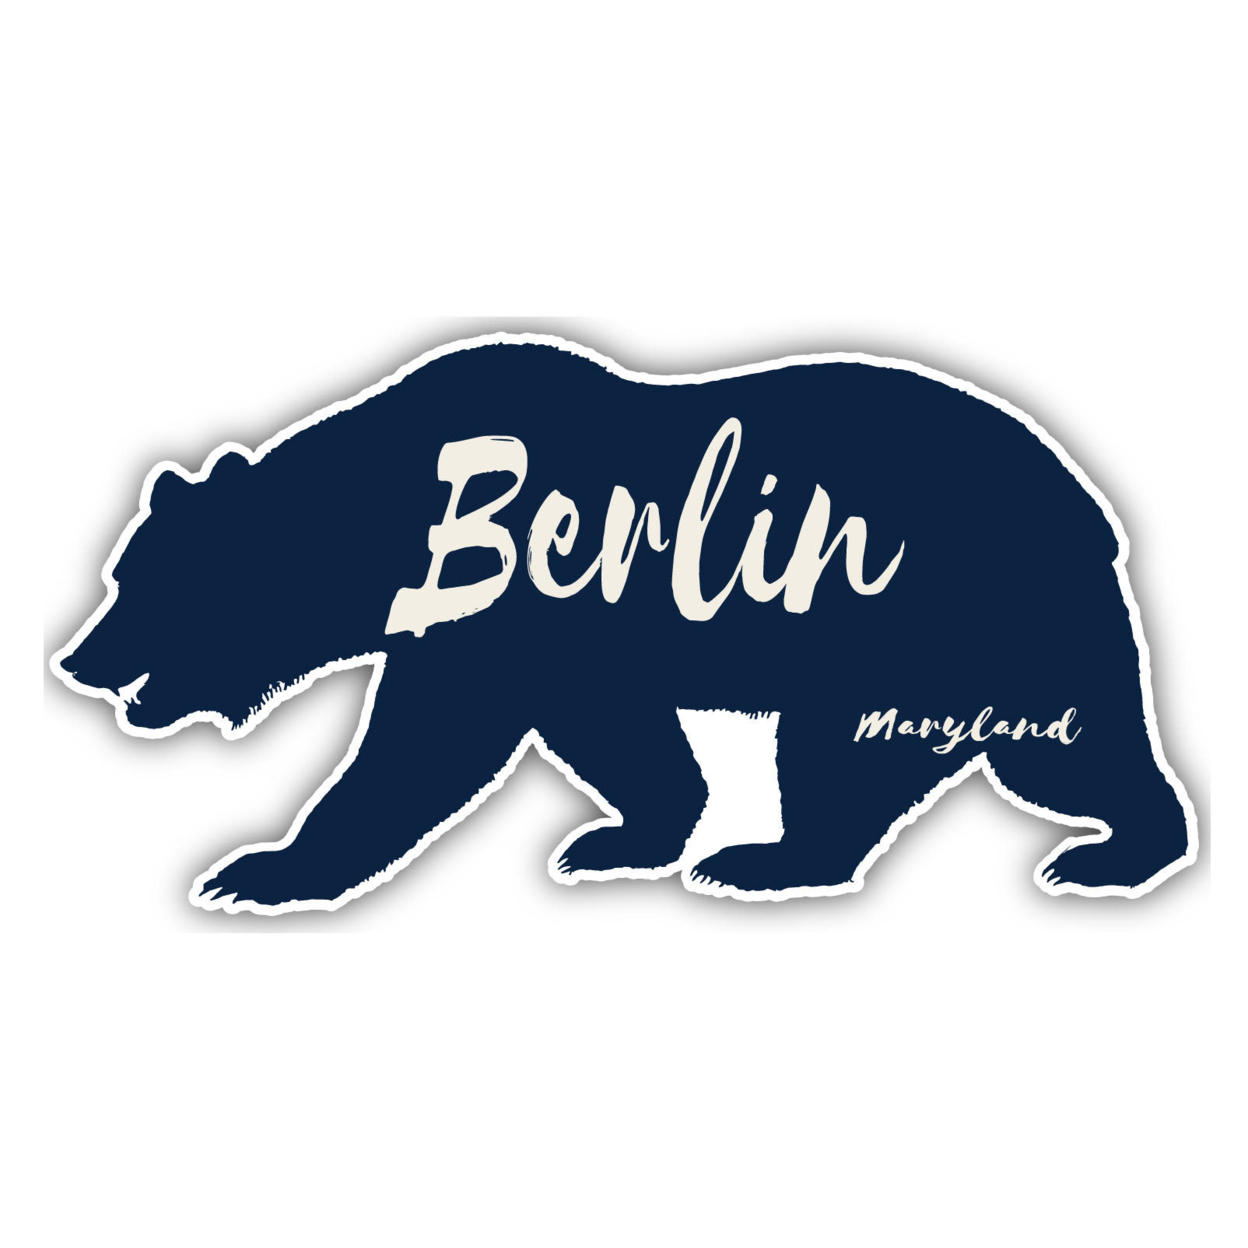 Berlin Maryland Souvenir Decorative Stickers (Choose Theme And Size) - Single Unit, 8-Inch, Bear